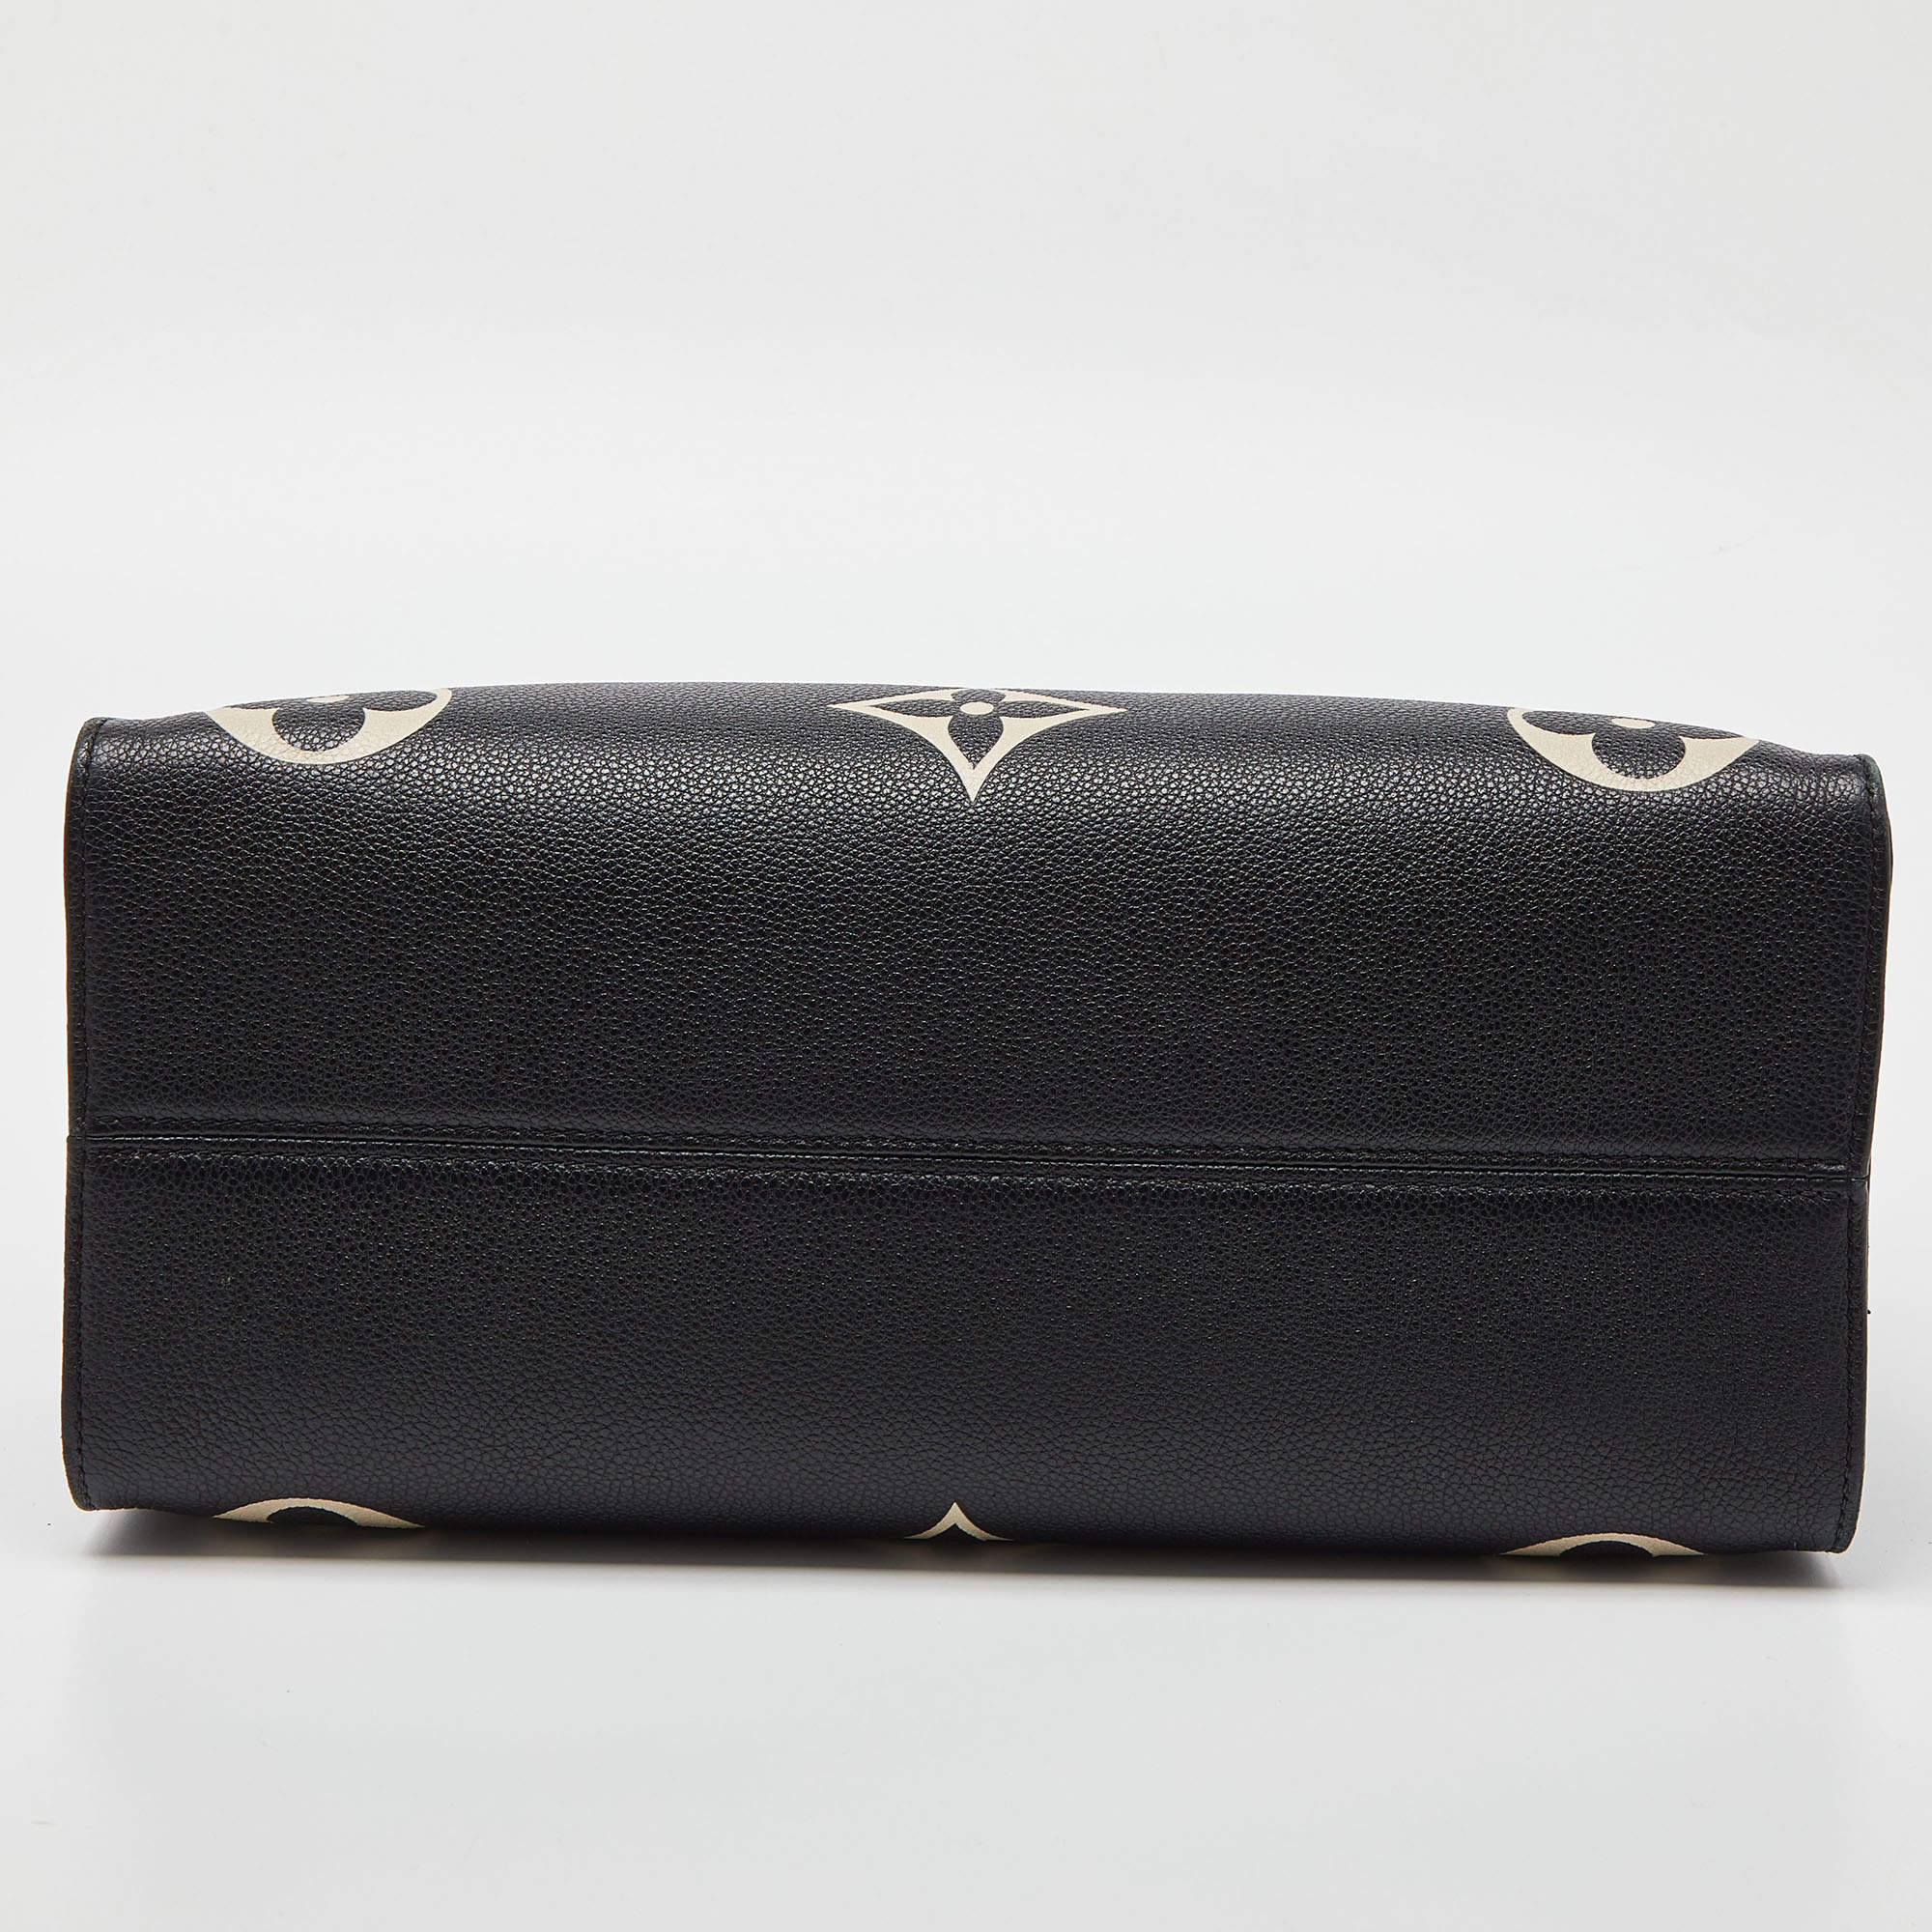 OnTheGo MM Bicolor Monogram Empreinte Leather - Women - Handbags